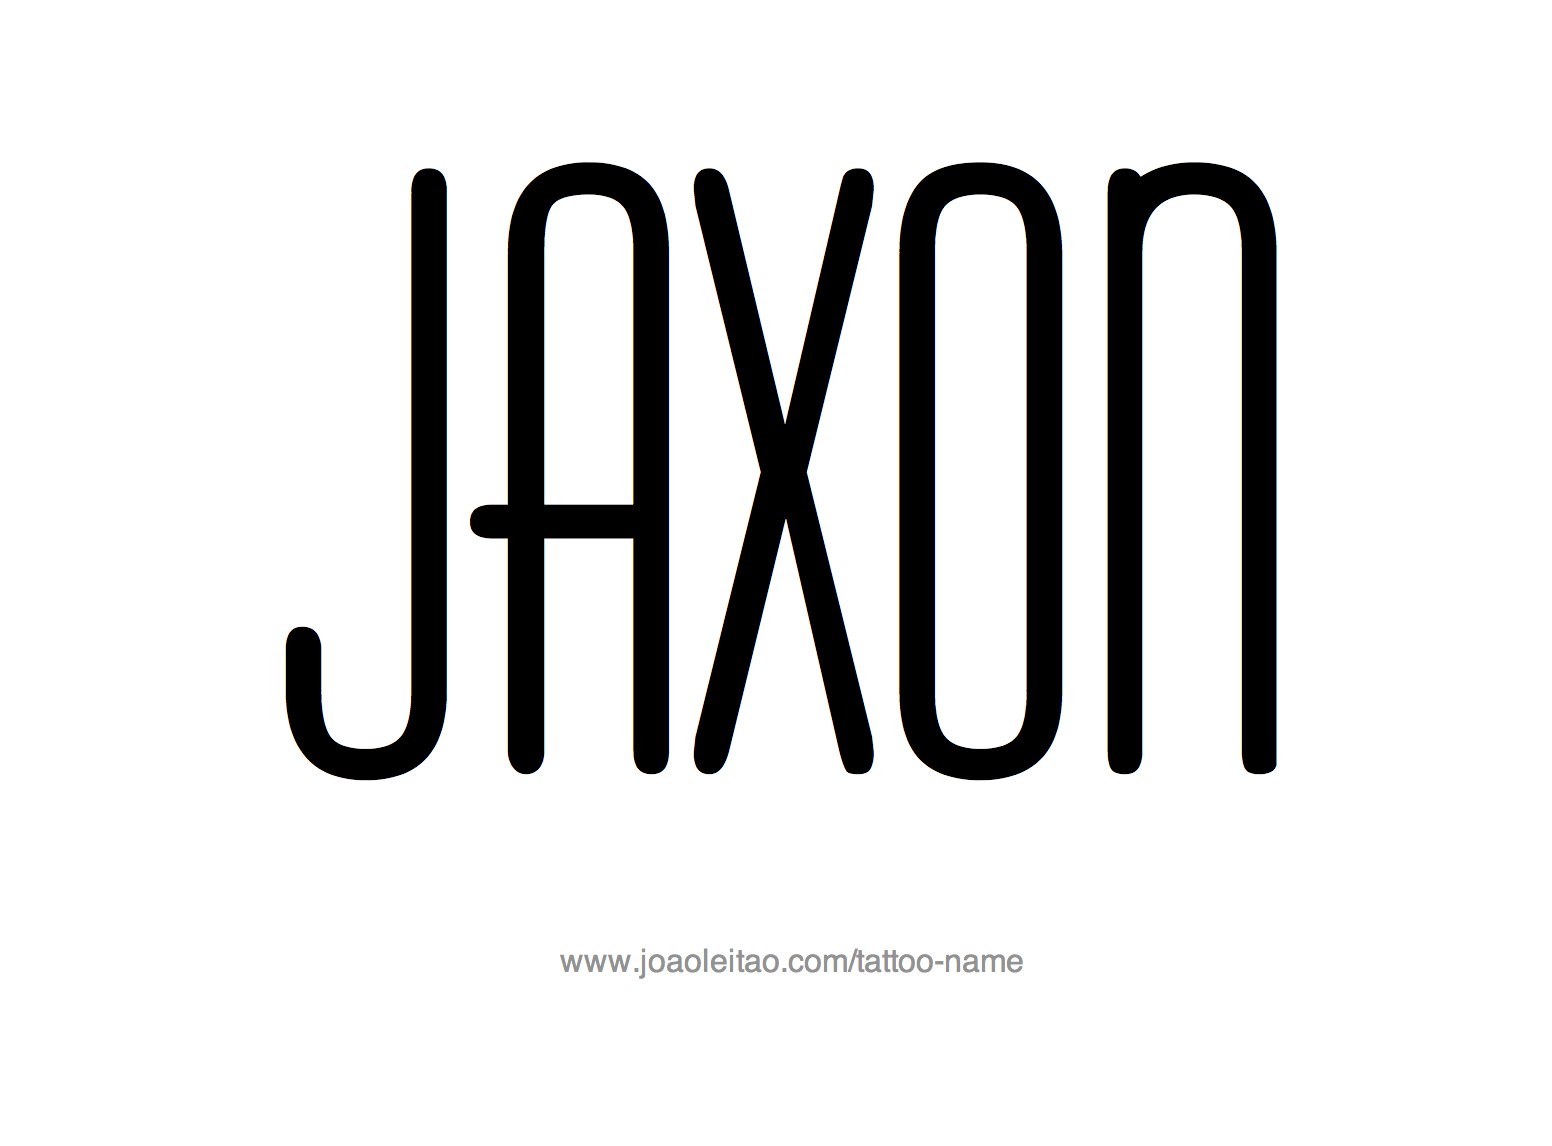 Tattoo Design Name Jaxon